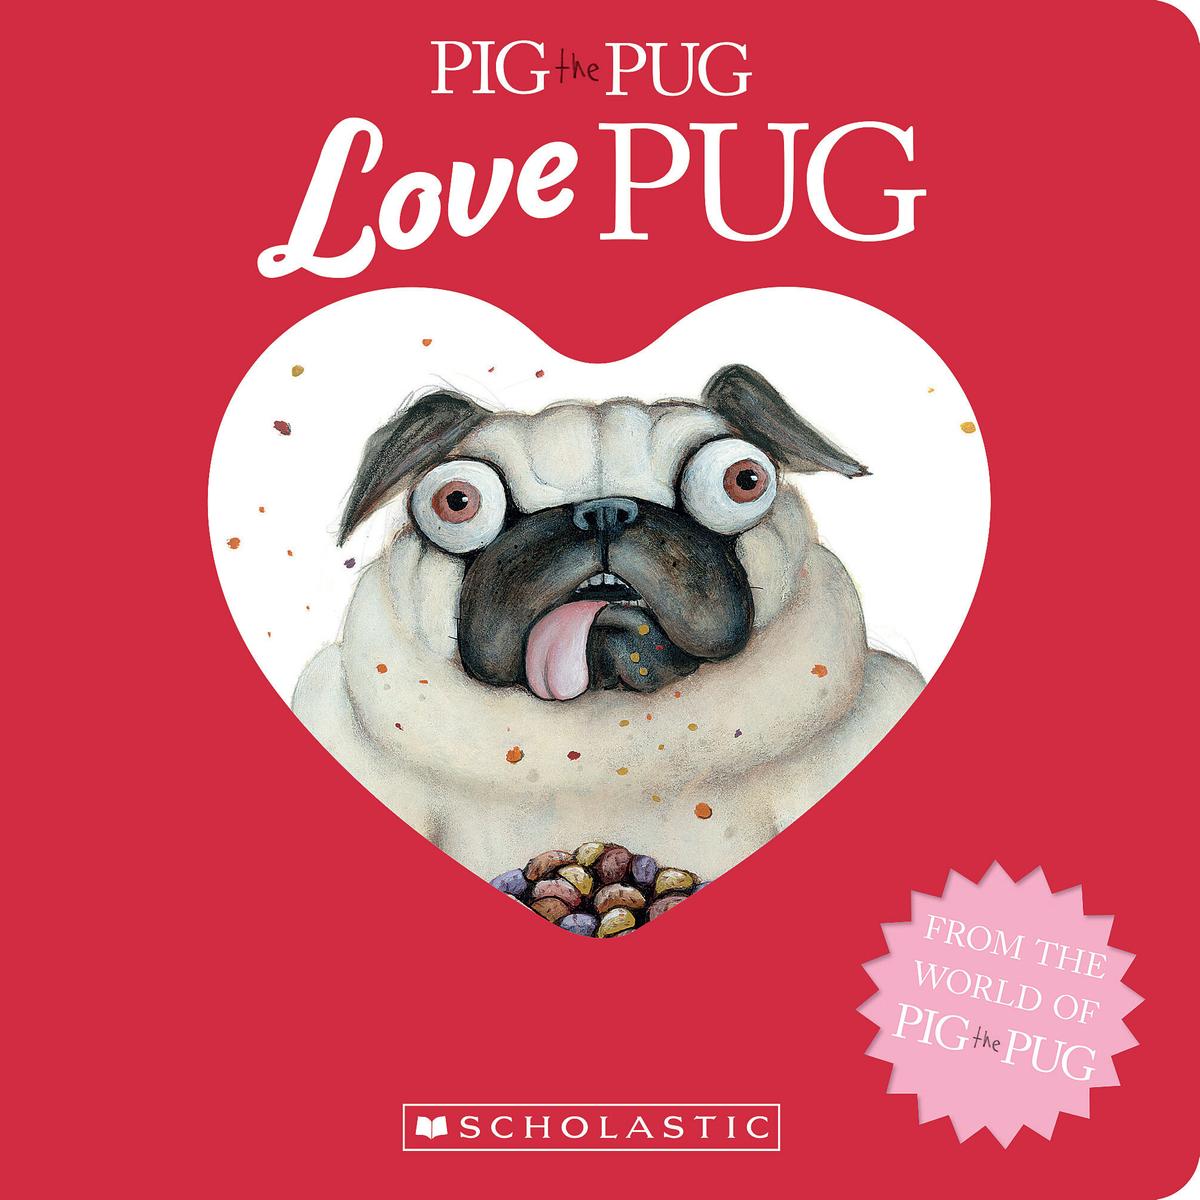 Pig the Pug - Love Pug